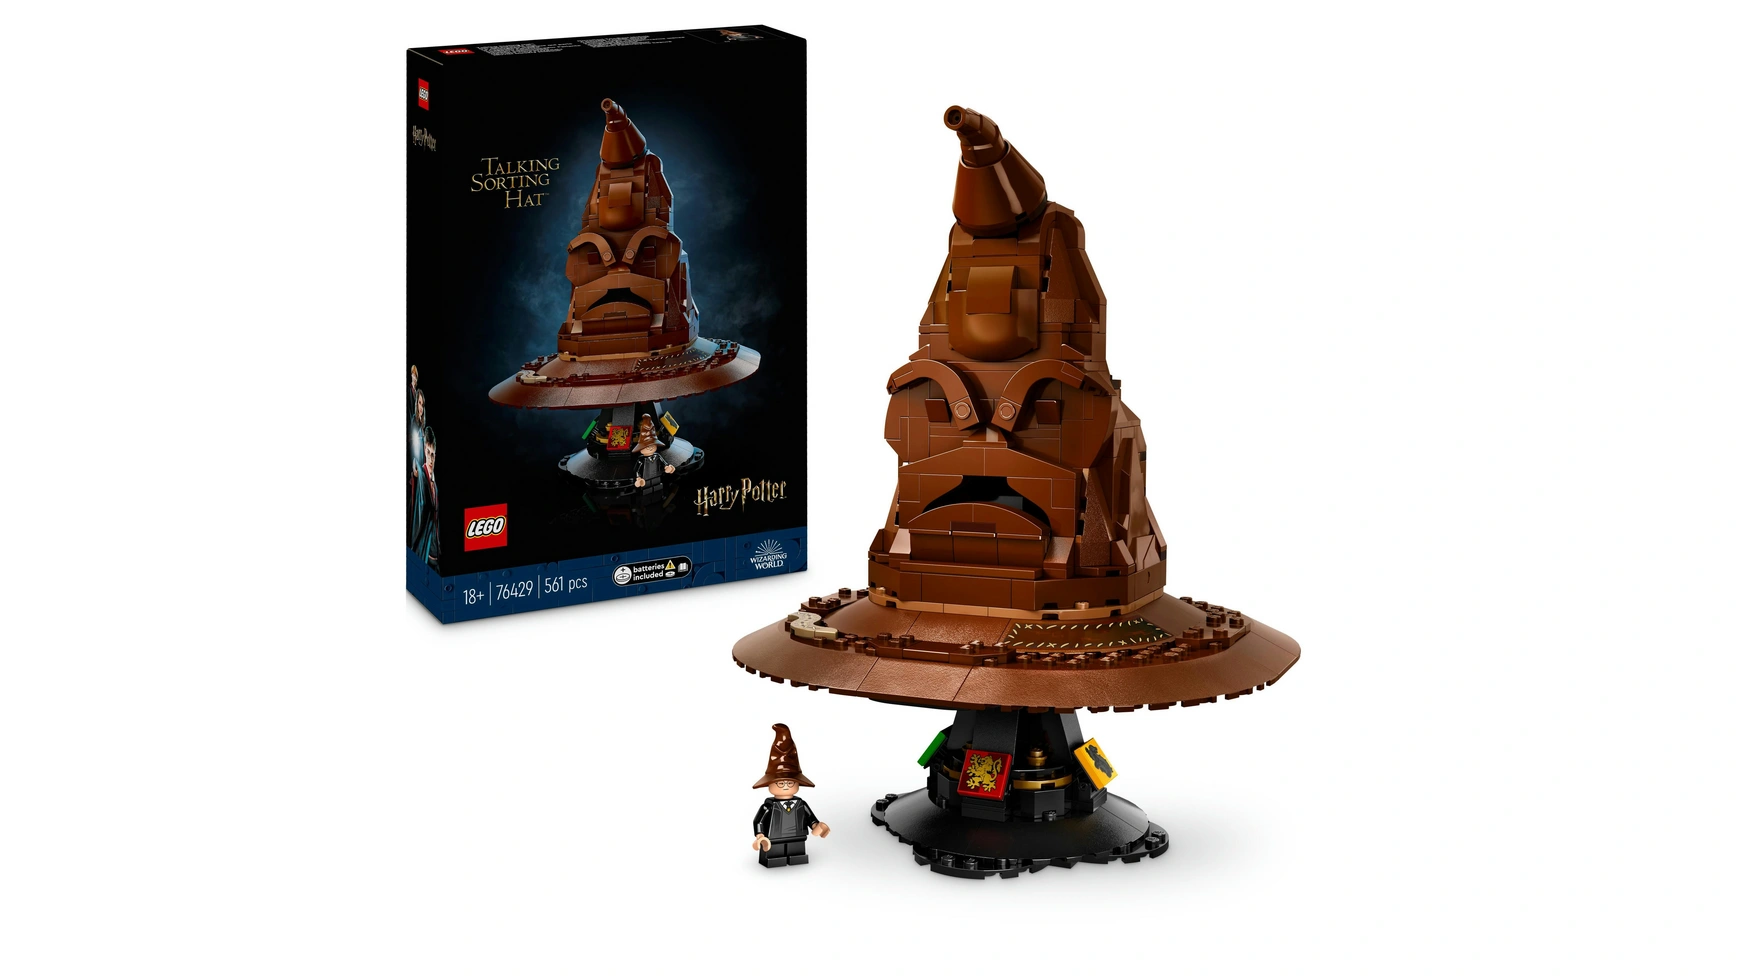 Lego Harry Potter Распределяющая шляпа Хогвартса пенелопа дуглас набор испорченный дуглас п закладка harry potter распределяющая шляпа магнитная